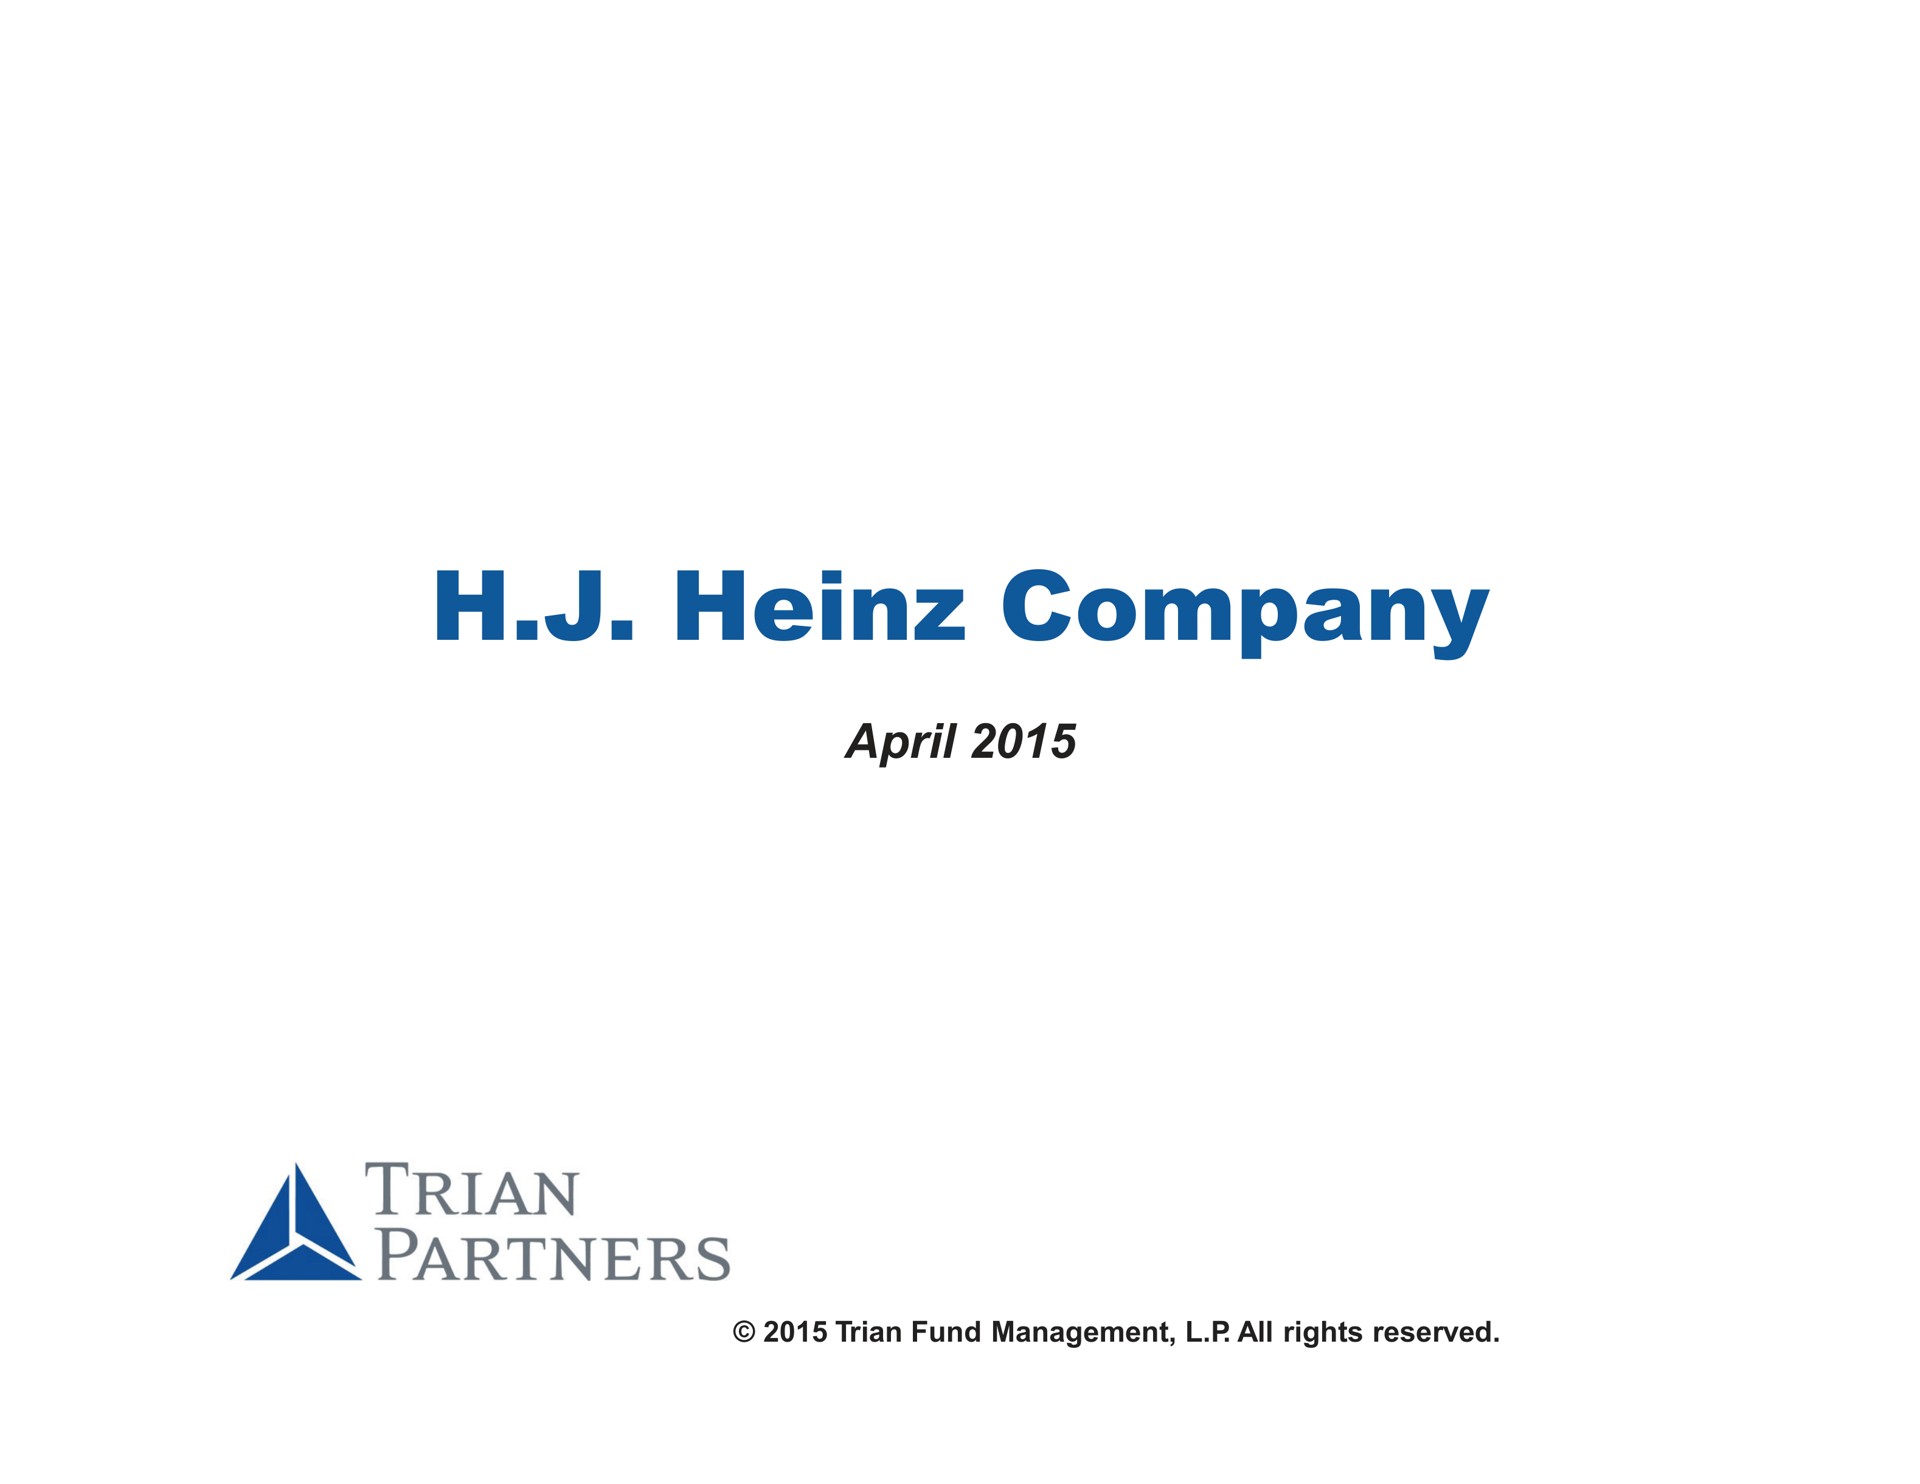 company partners | Trian Partners